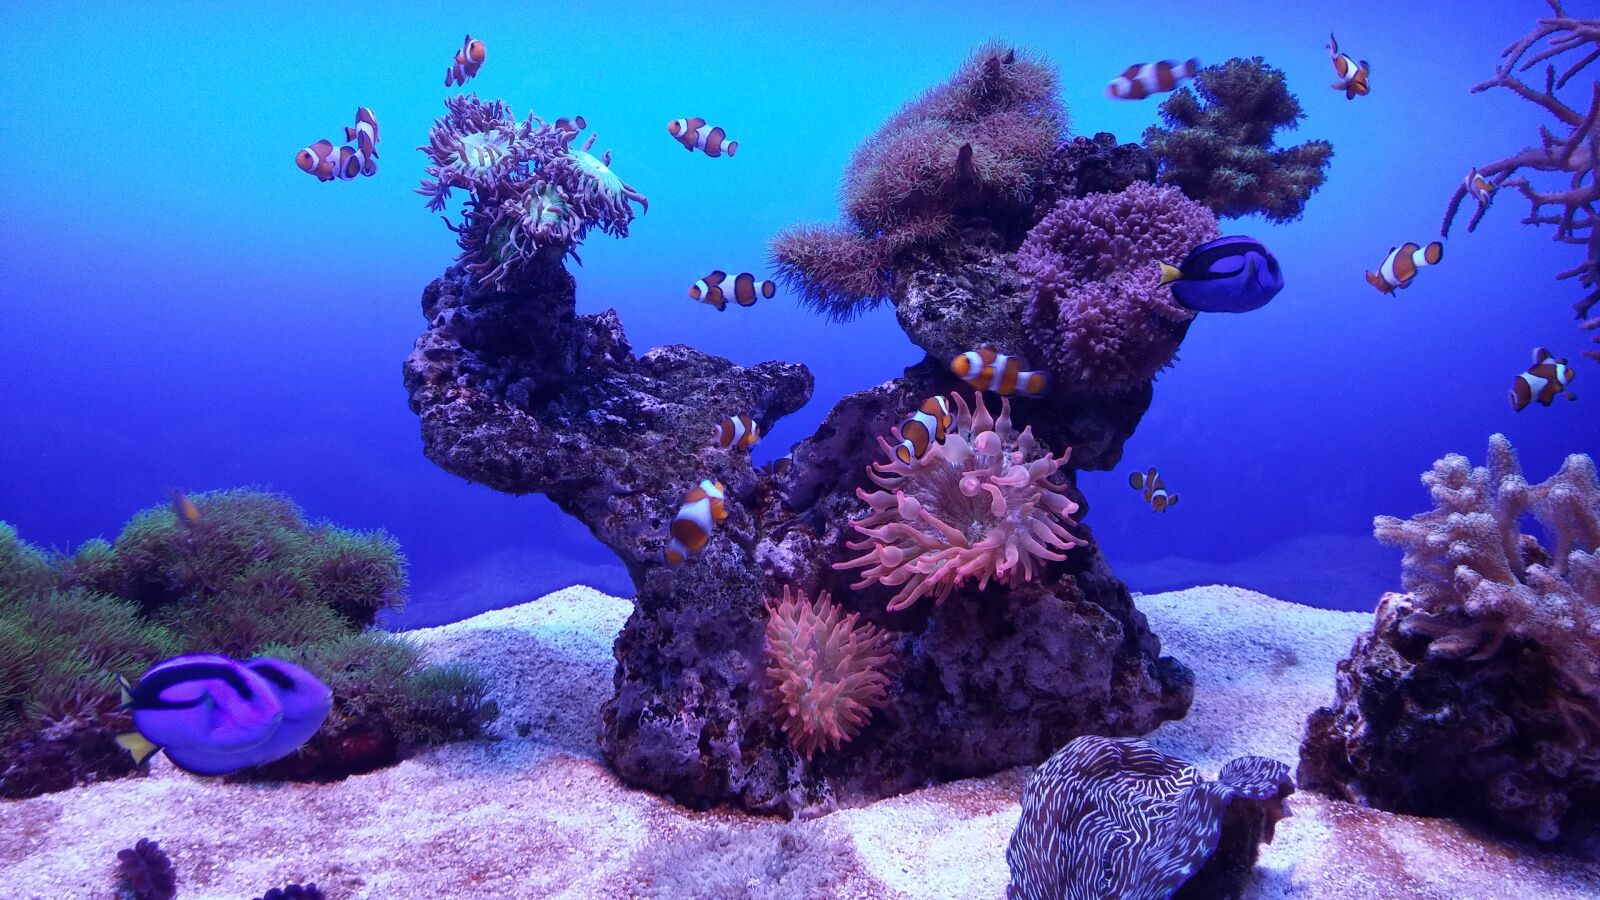 LG G3 sample photo. Fish, aquarium, underwater photography